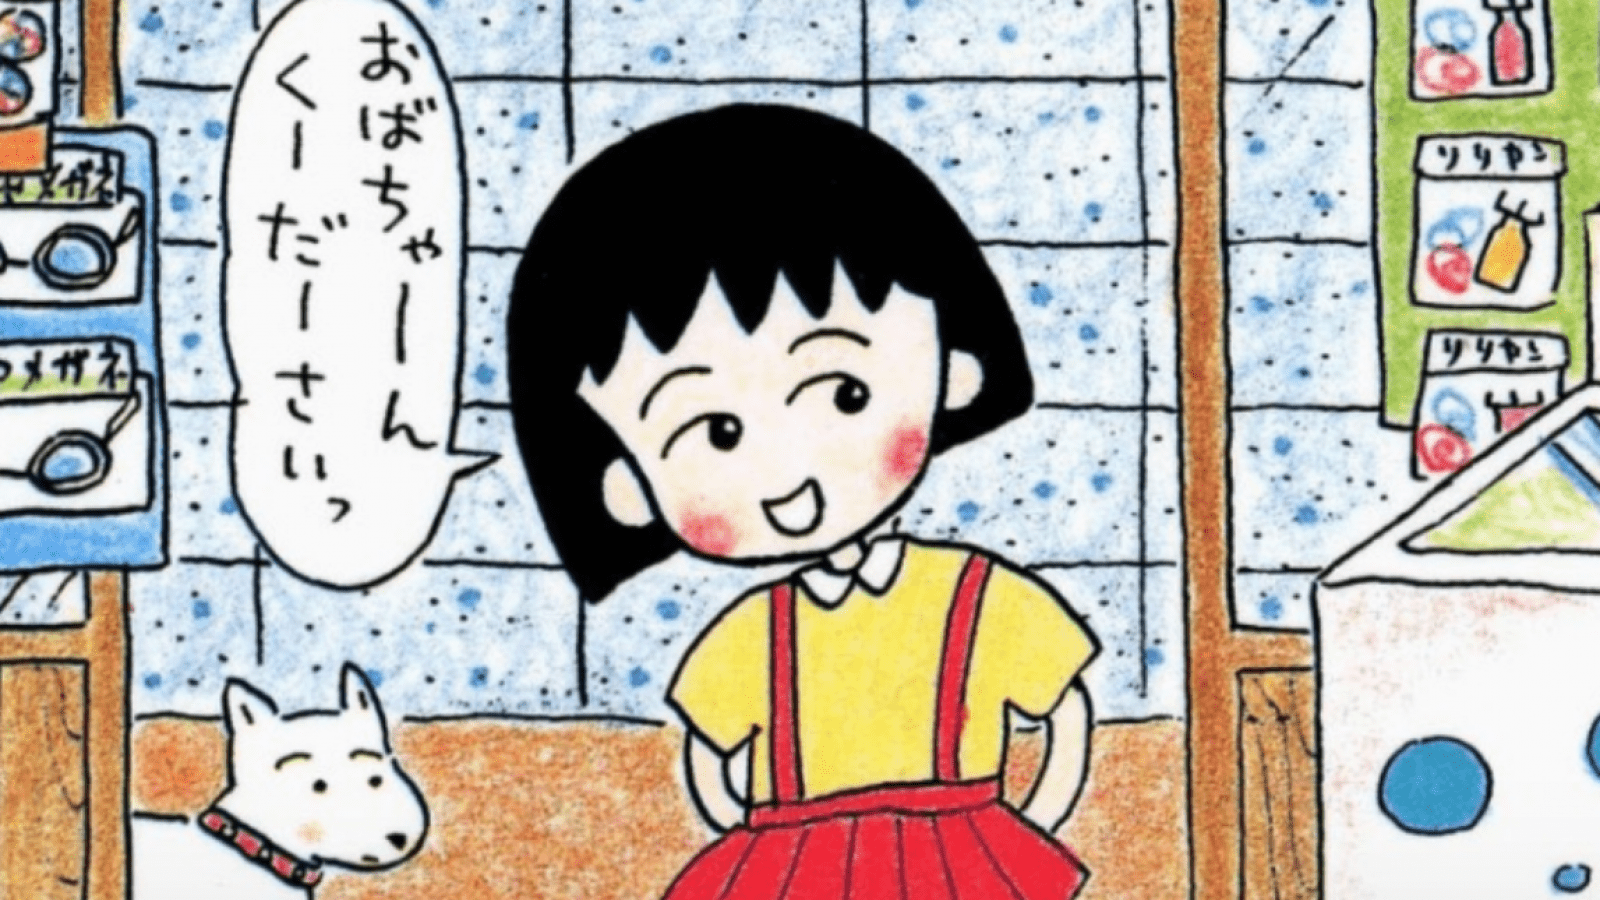 Momoko Sakura's original manga